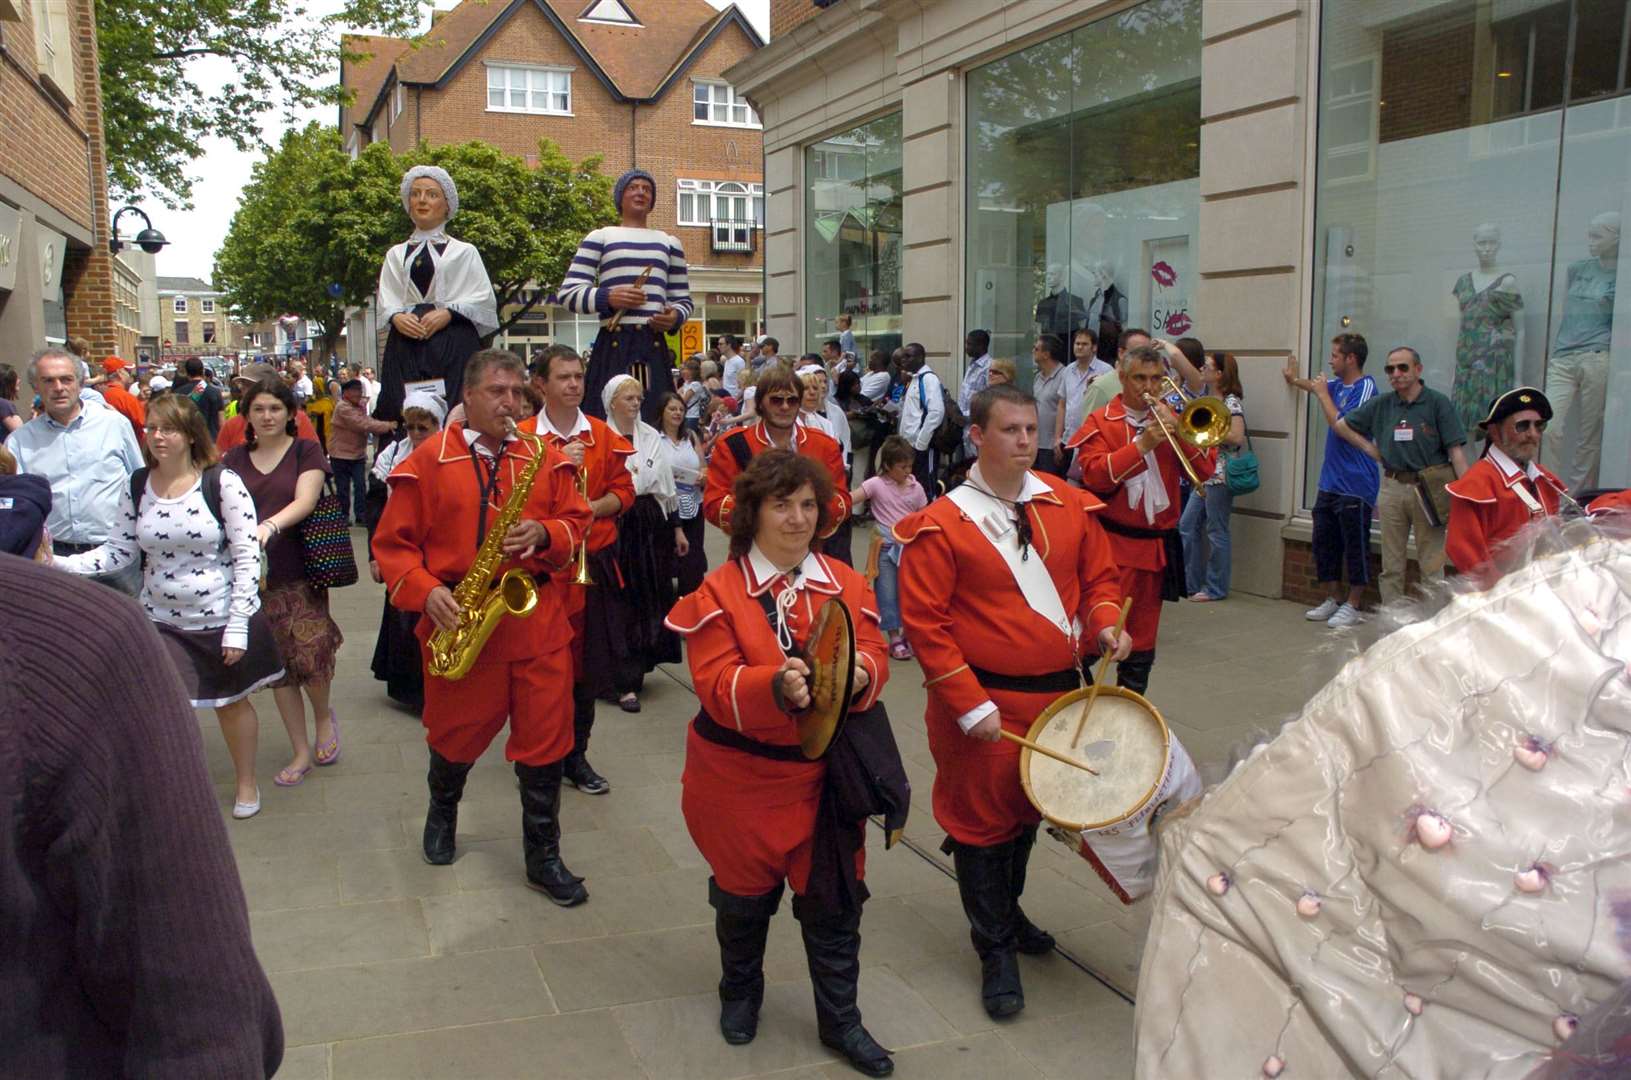 The parade through Canterbury city centre